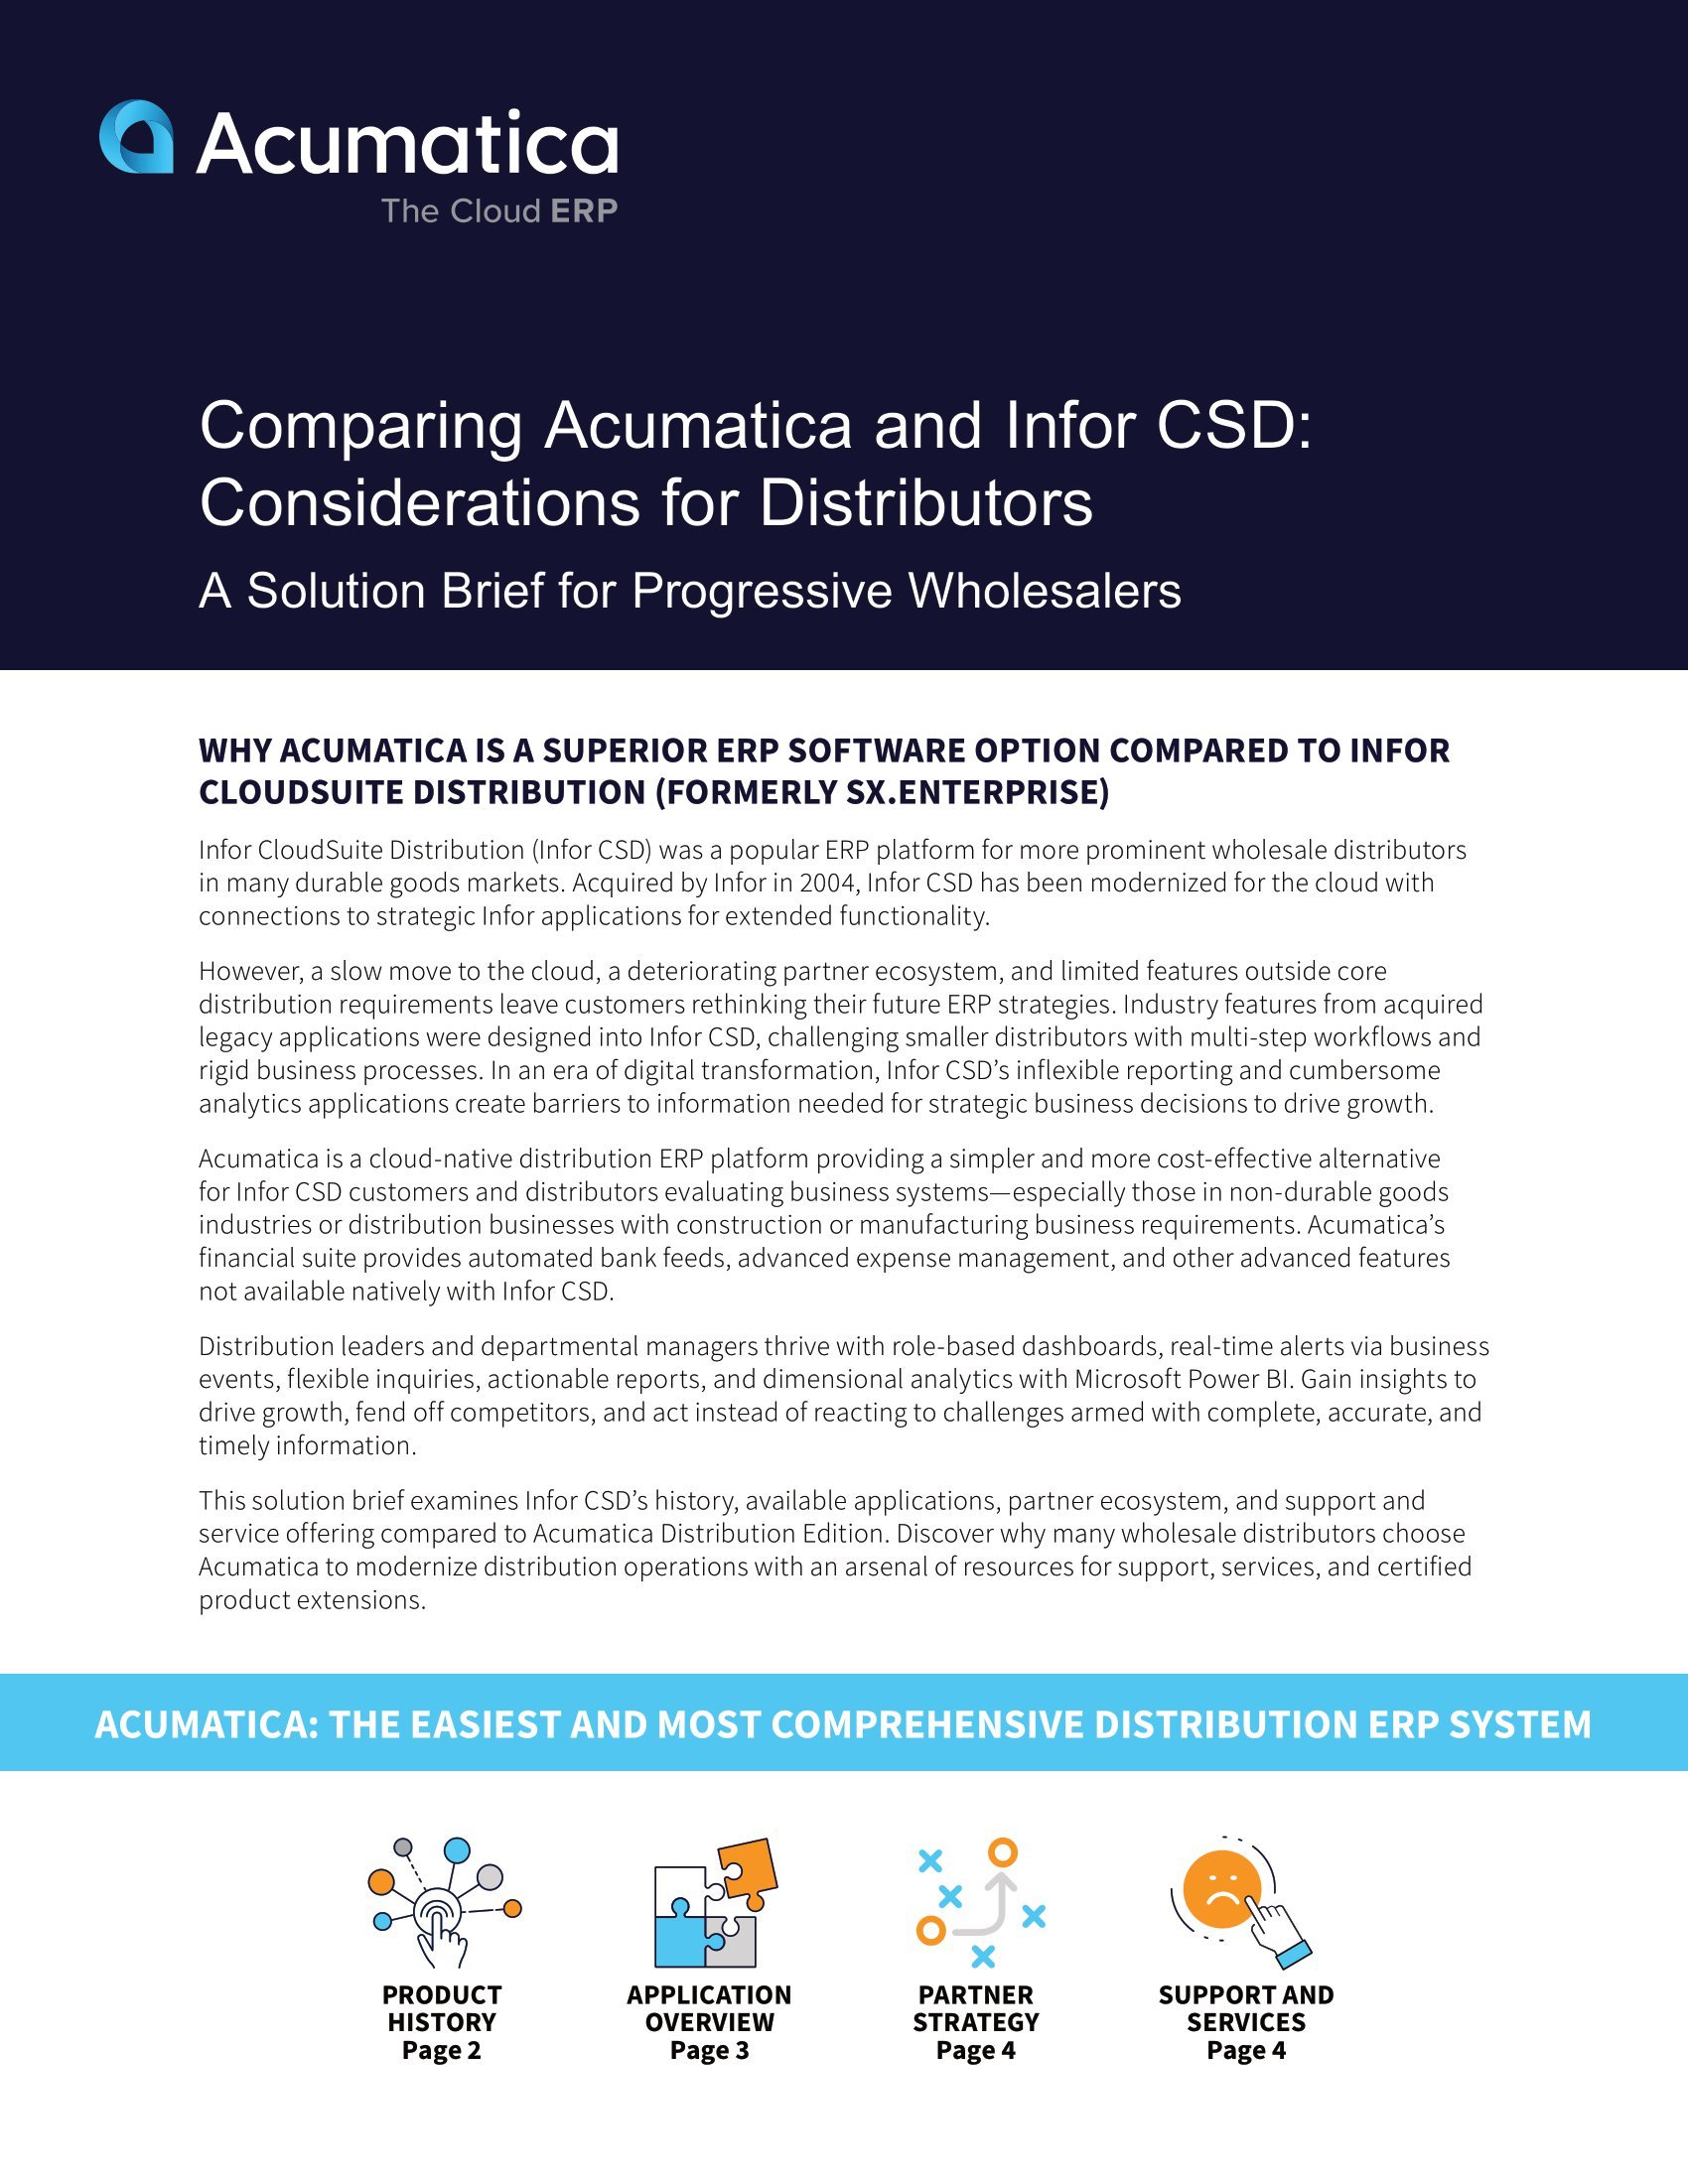 Descubra por qué Acumatica es un sistema ERP de distribución superior en comparación con Infor CloudSuite Distribution (CSD)